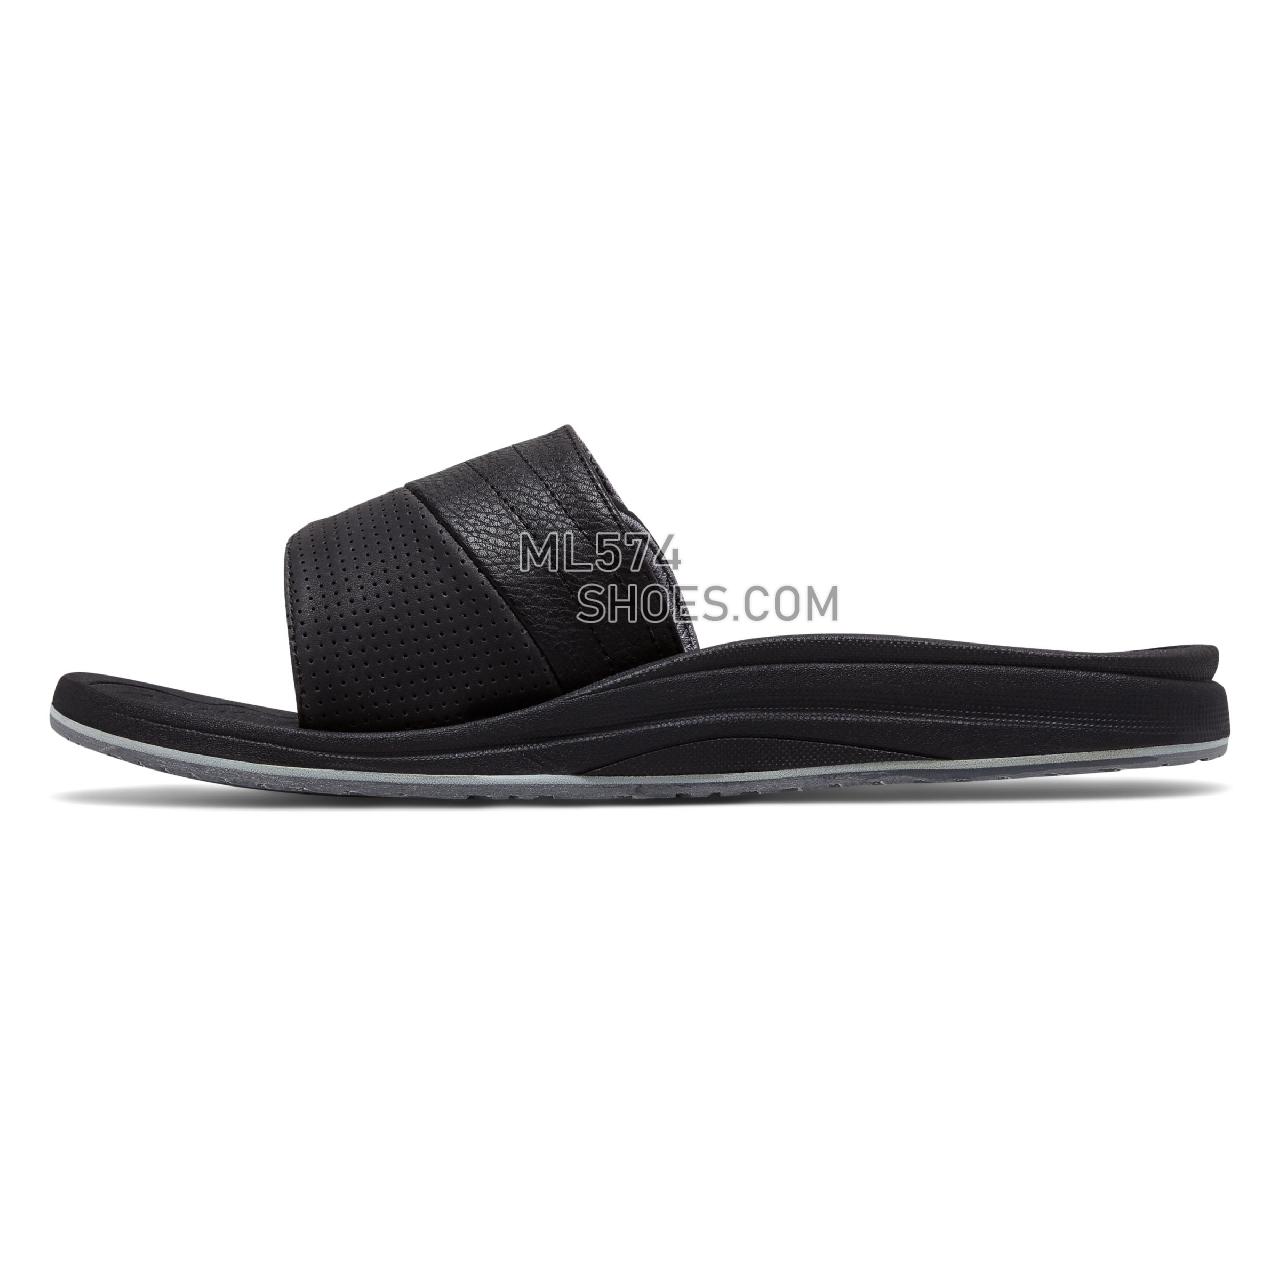 New Balance PureAlign Recharge Slide - Men's 3080 - Sandals Black with Grey - M3080BGR